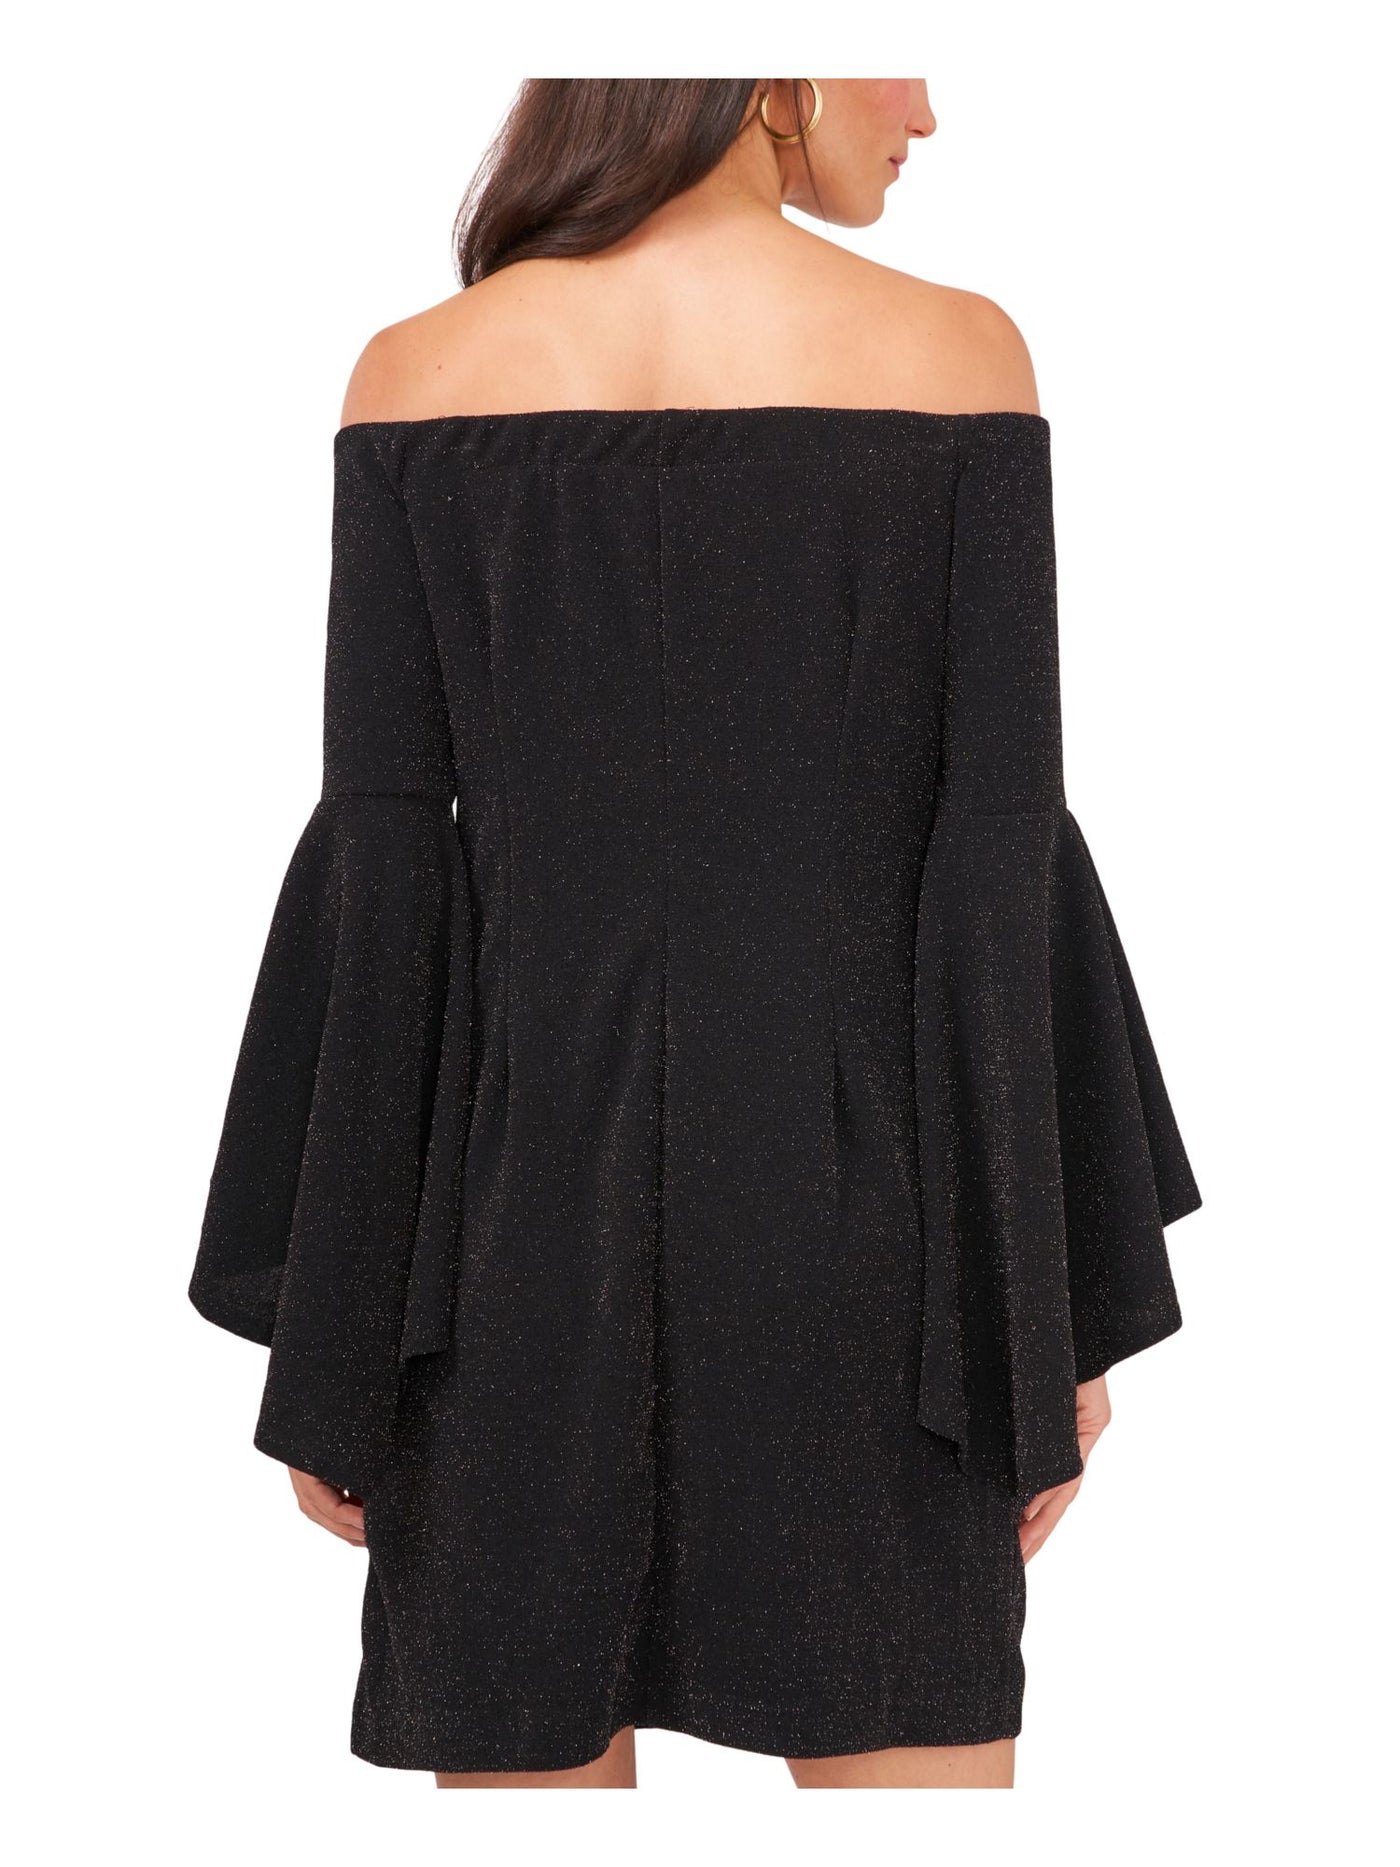 VINCE CAMUTO Womens Black Glitter Pullover Lined Bell Sleeve Off Shoulder Short Cocktail Shift Dress M